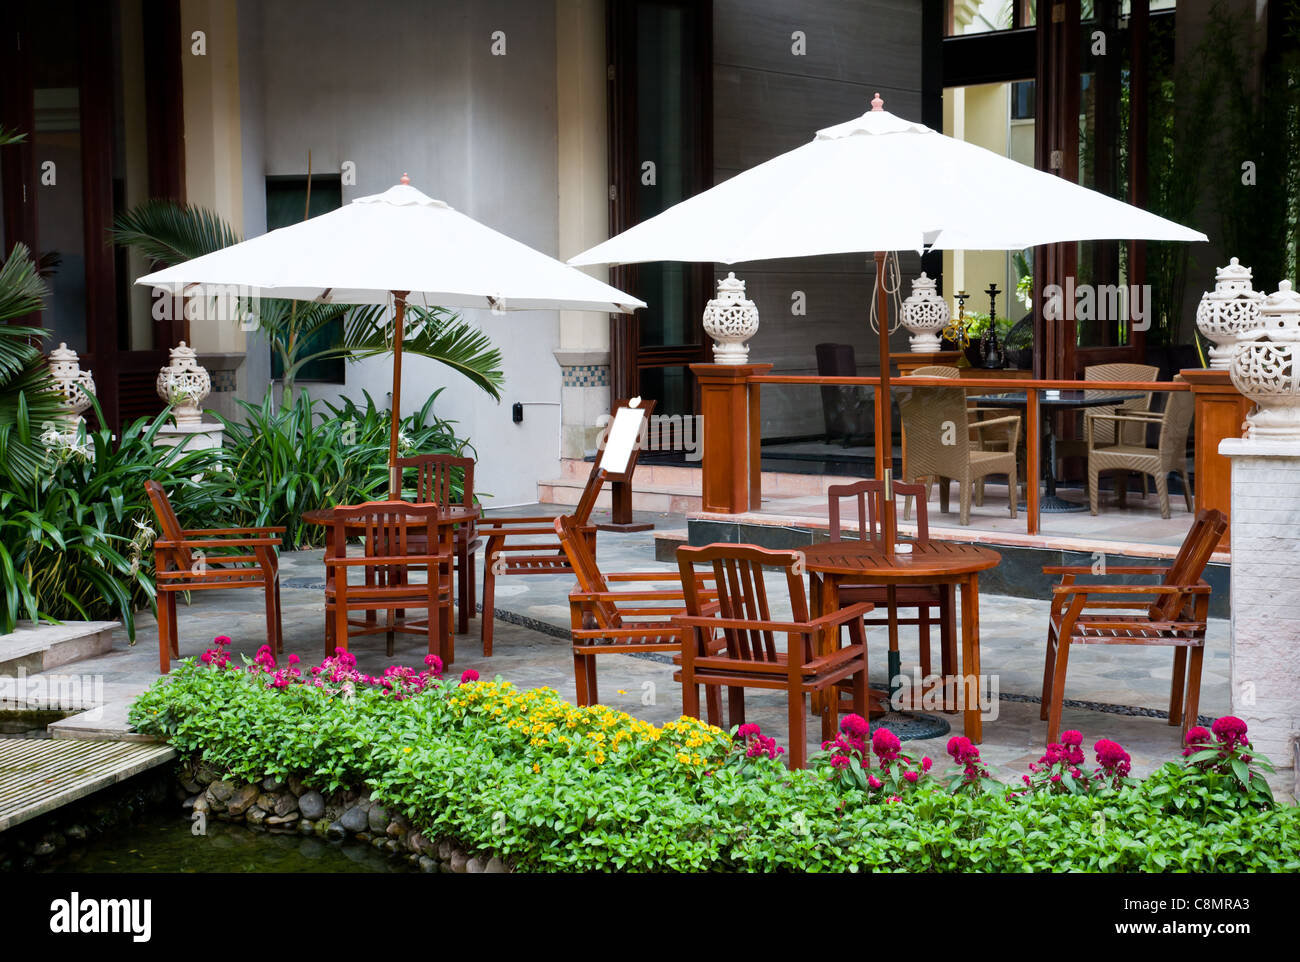 Outdoor Cafe At Hotel Garden Stock Photo Alamy - Hotel Restaurant Outdoor